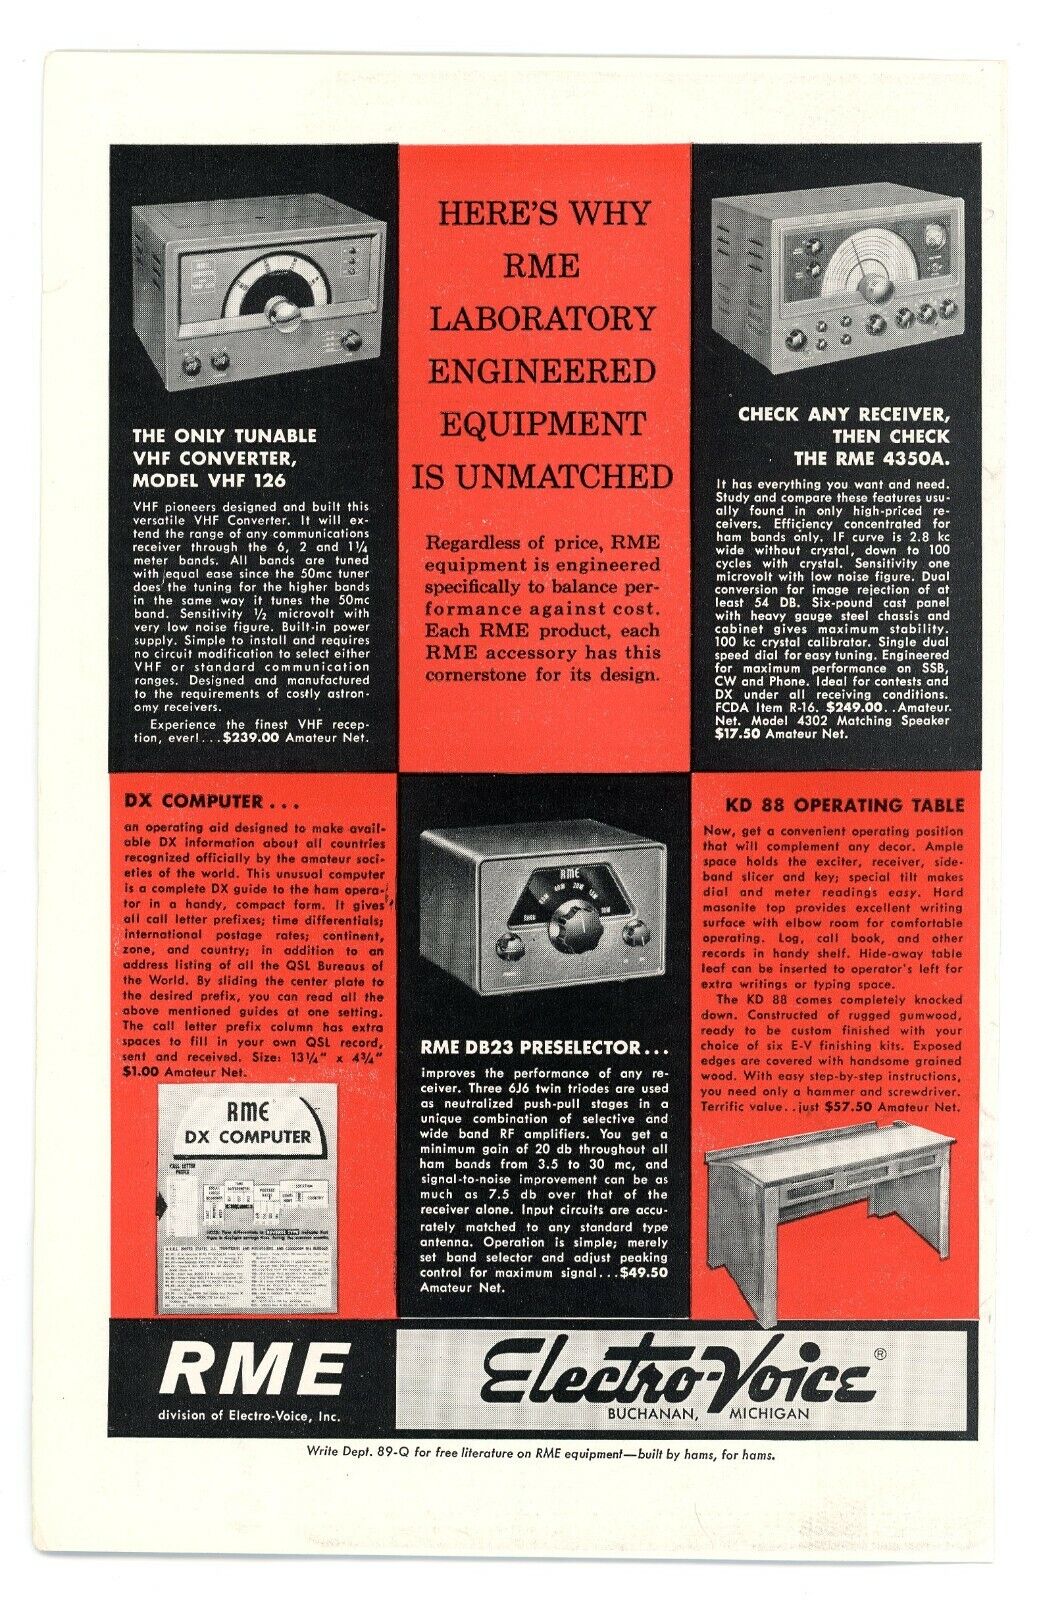 QST Ham Radio Magazine Print Ad RME Laboratory Engineered Electro-Voice (8/59)